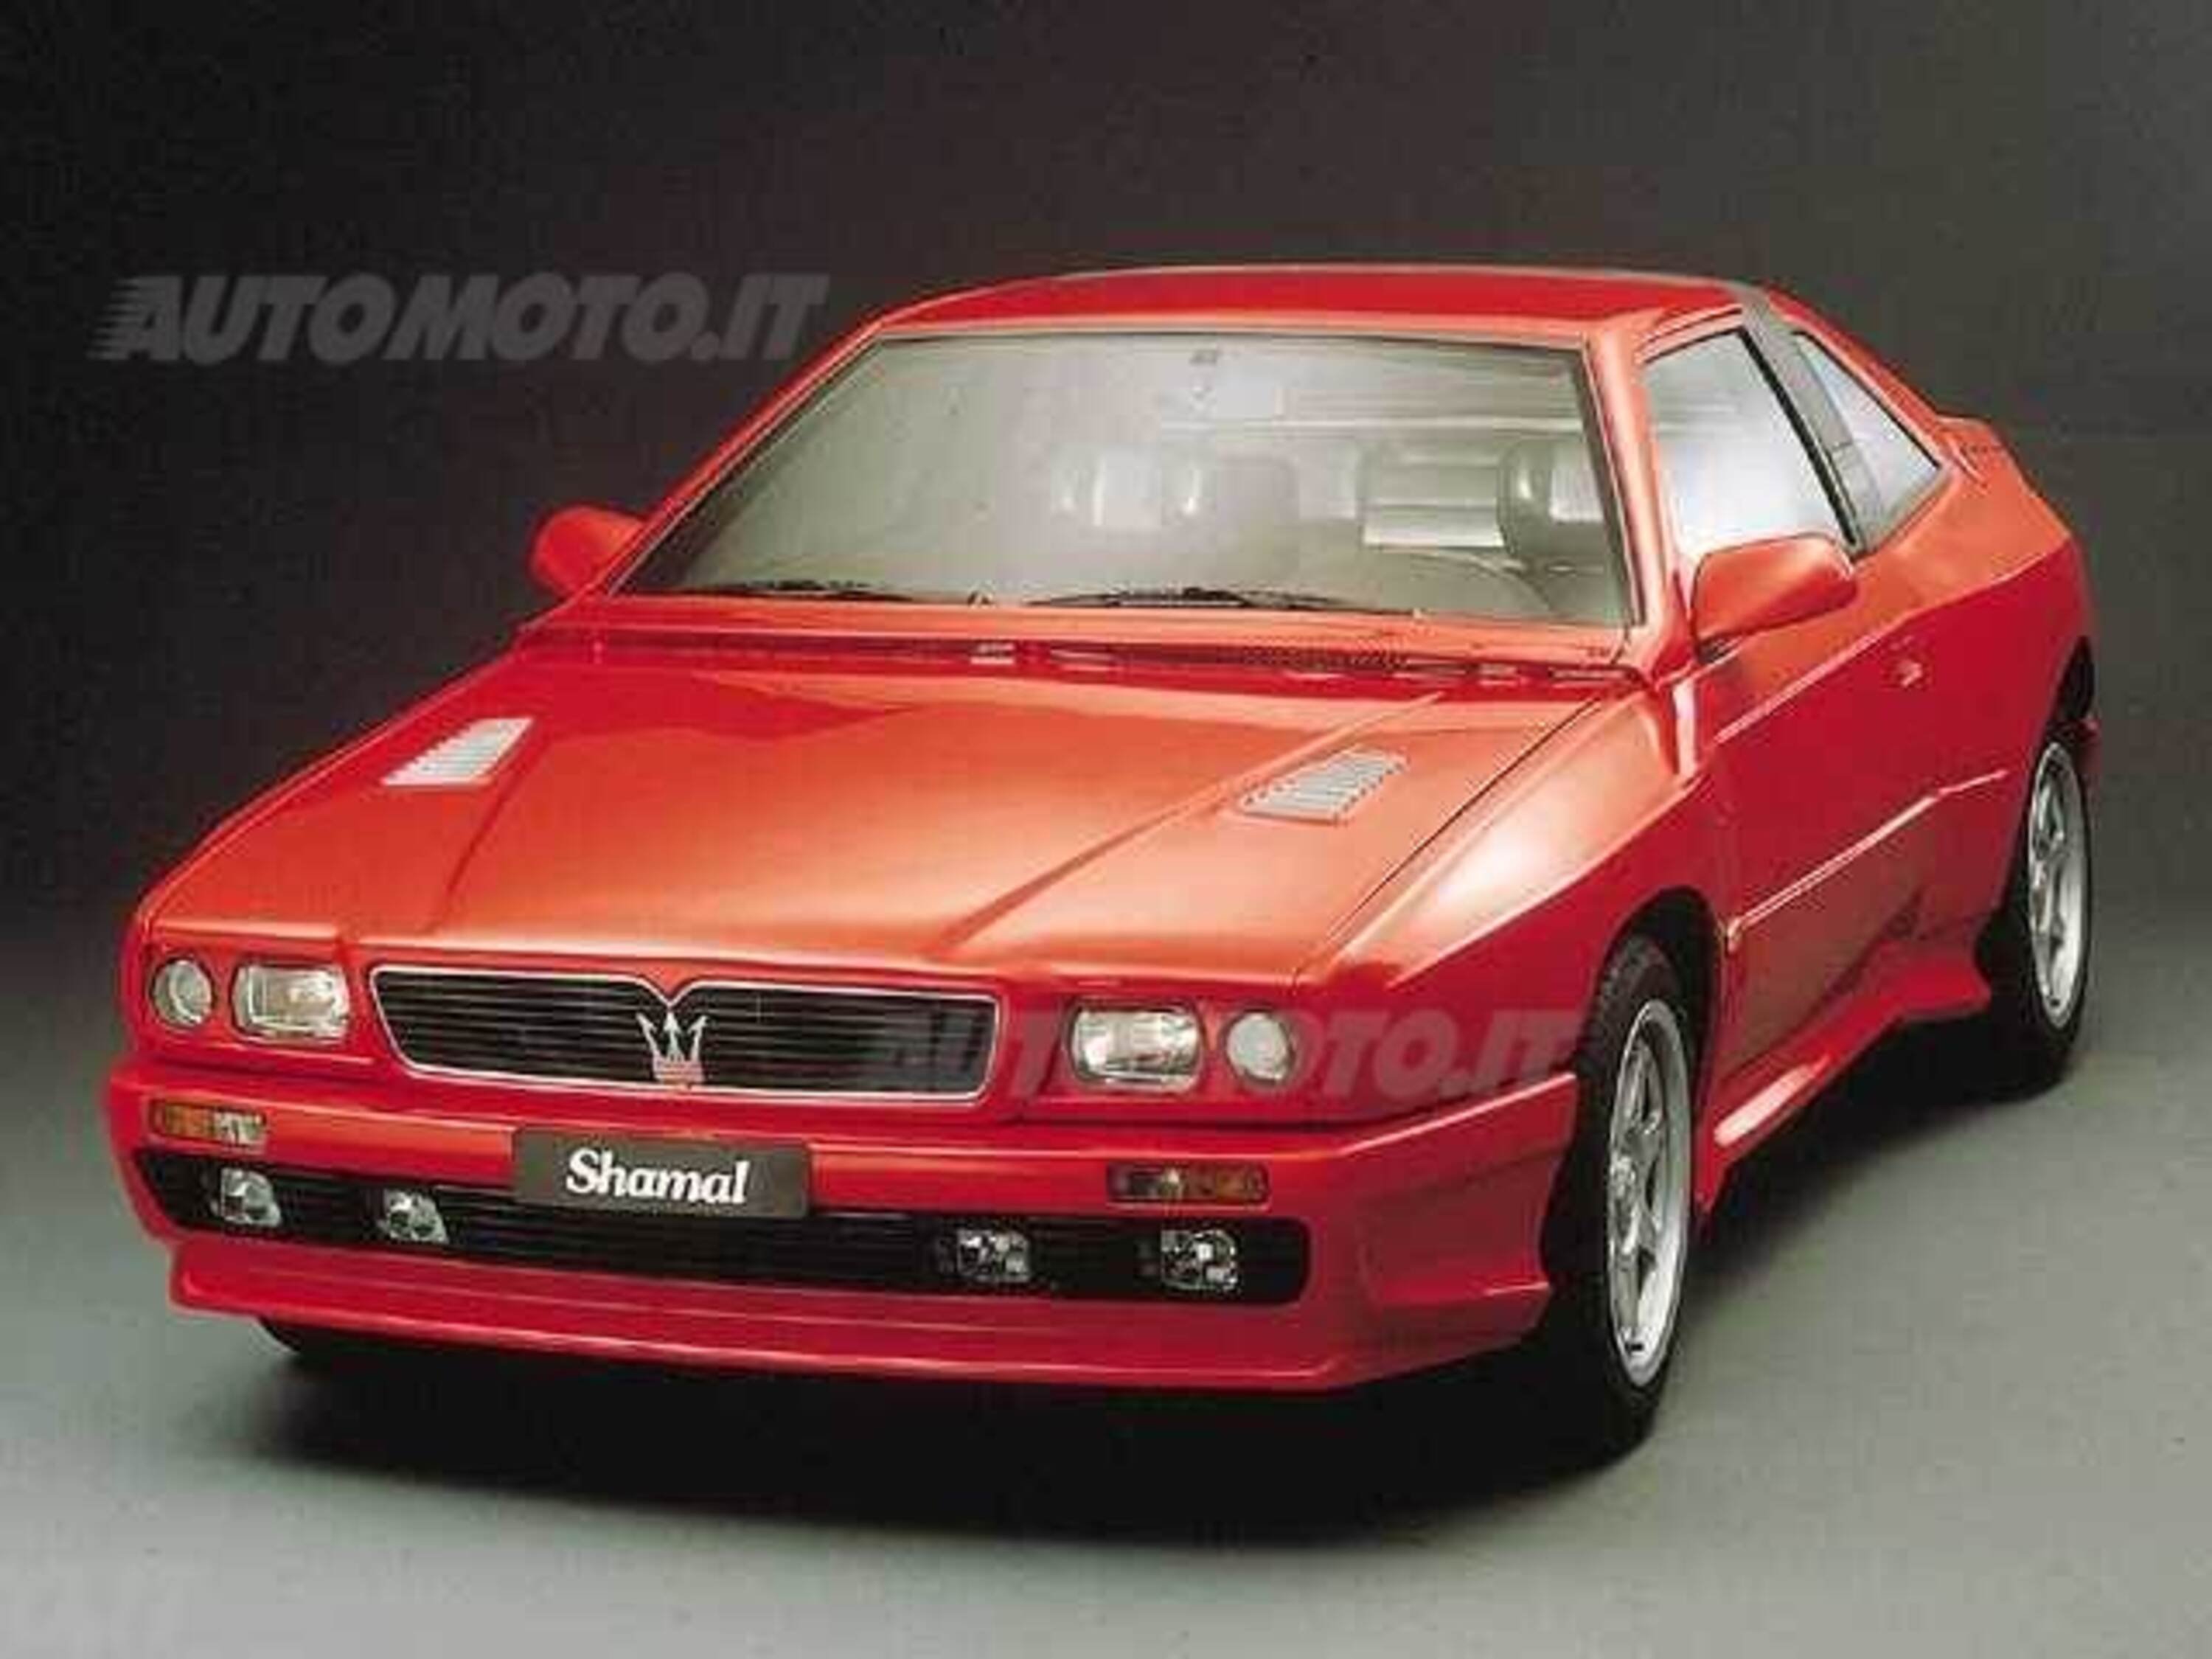 Maserati Shamal (1991-95)